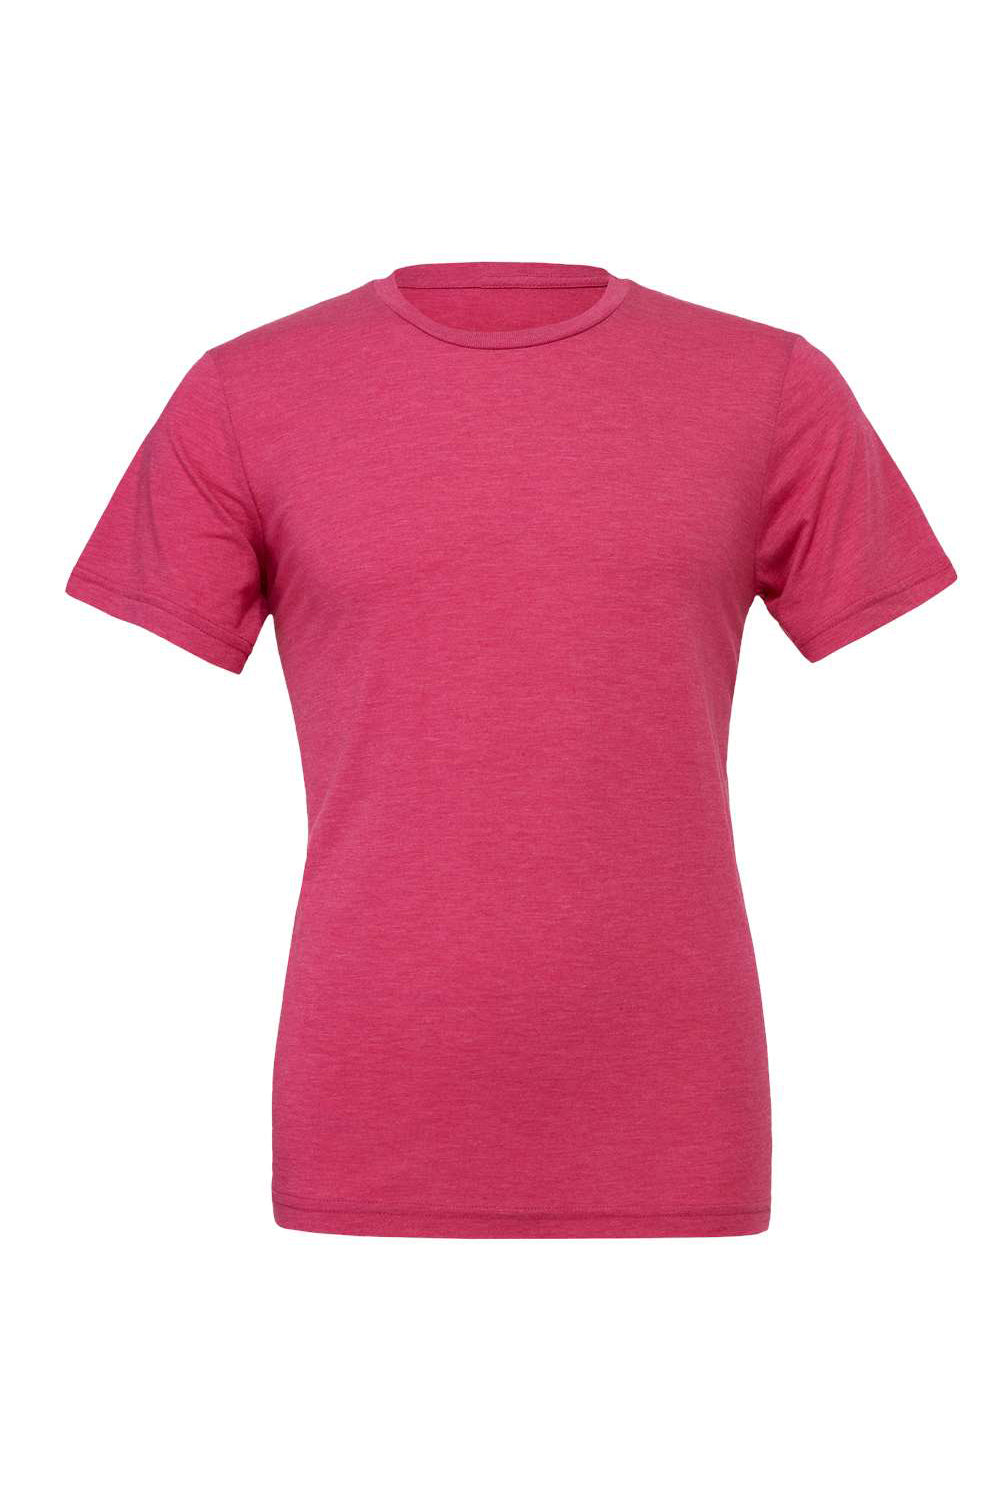 Bella + Canvas BC3413/3413C/3413 Mens Short Sleeve Crewneck T-Shirt Berry Pink Flat Front